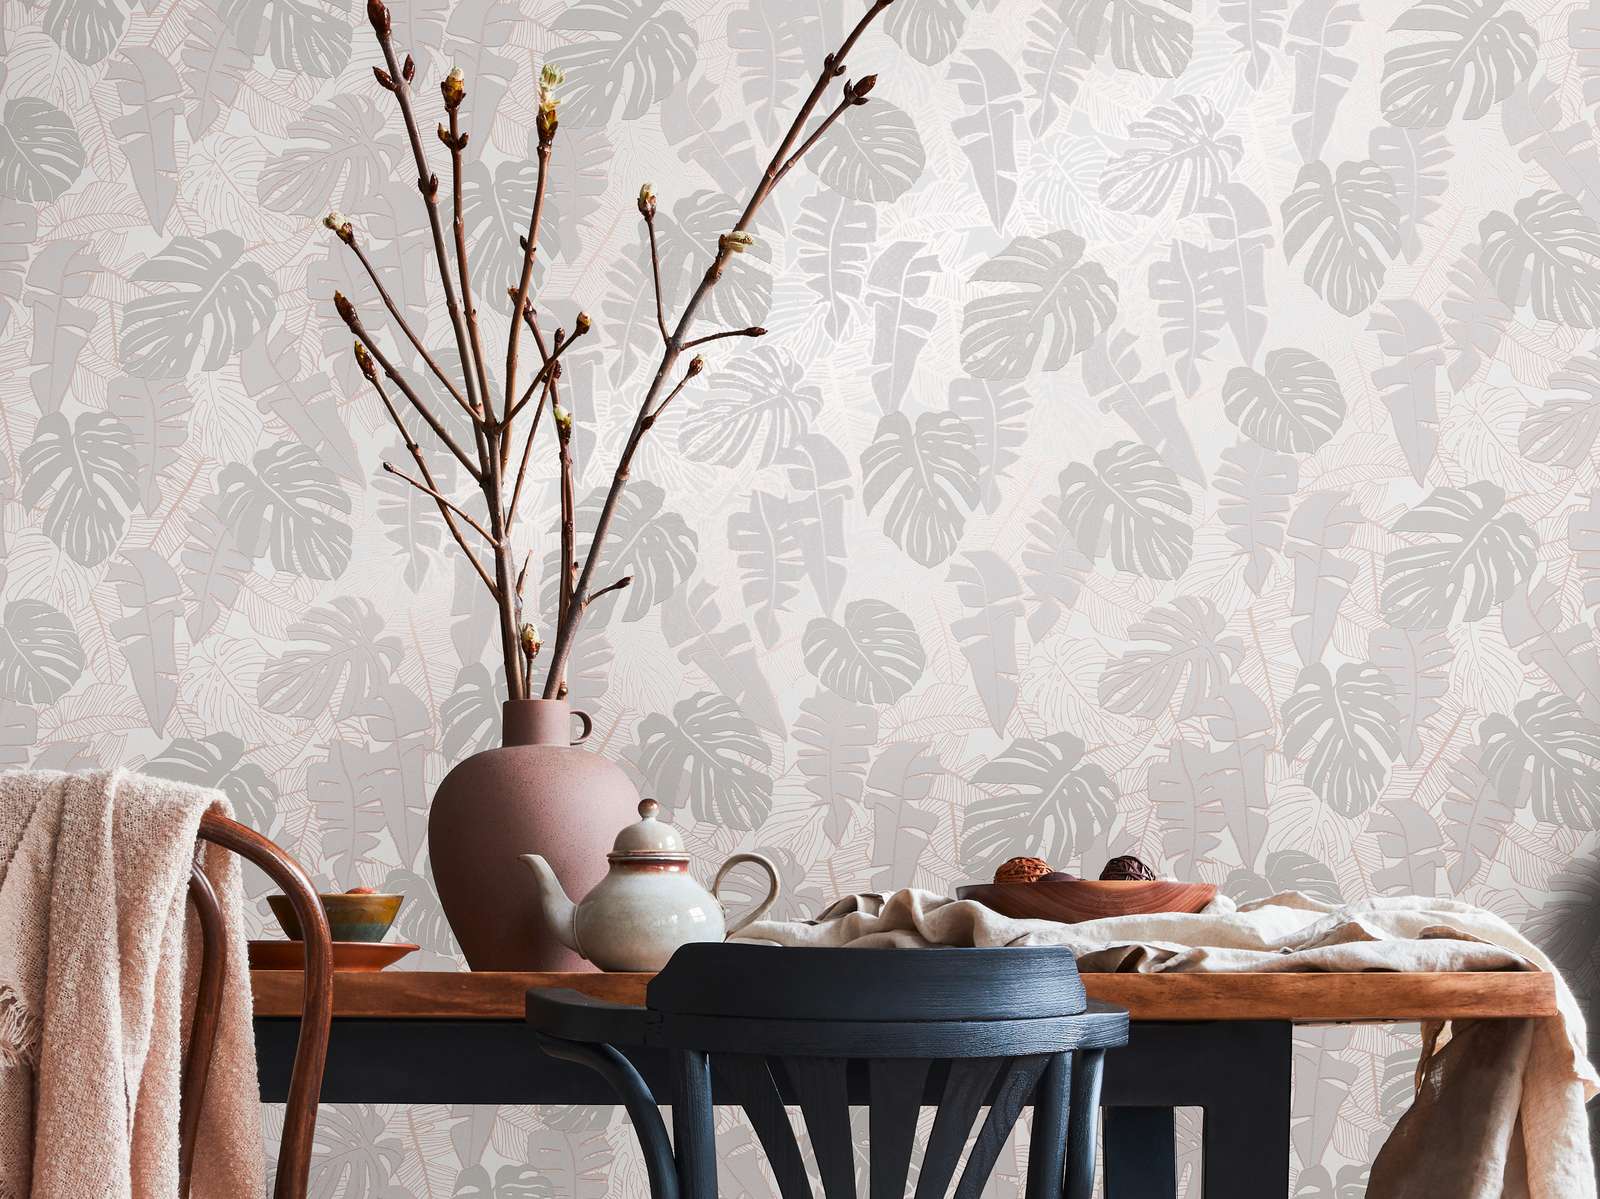             Non-woven wallpaper with banana leaves in jungle look & metallic effect - grey, metallic
        